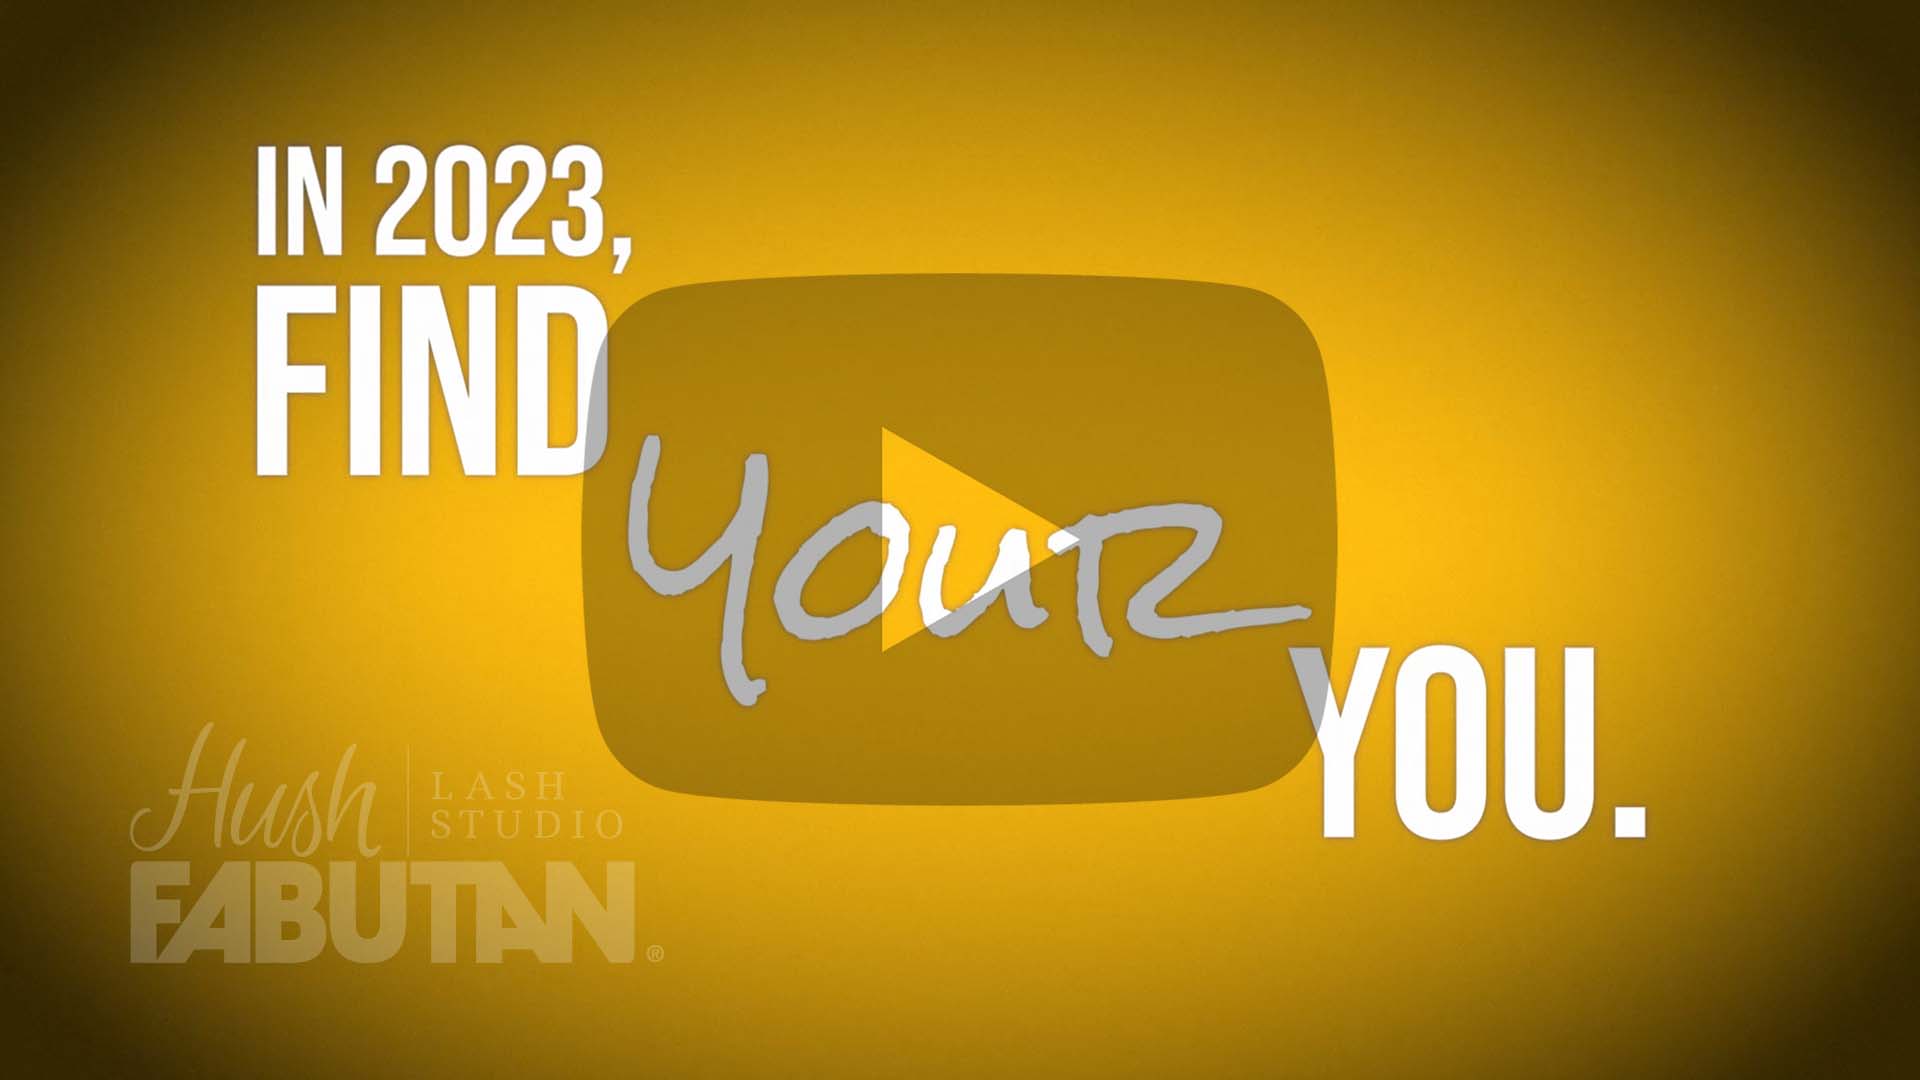 Watch FABUTAN | Find Your You on YouTube